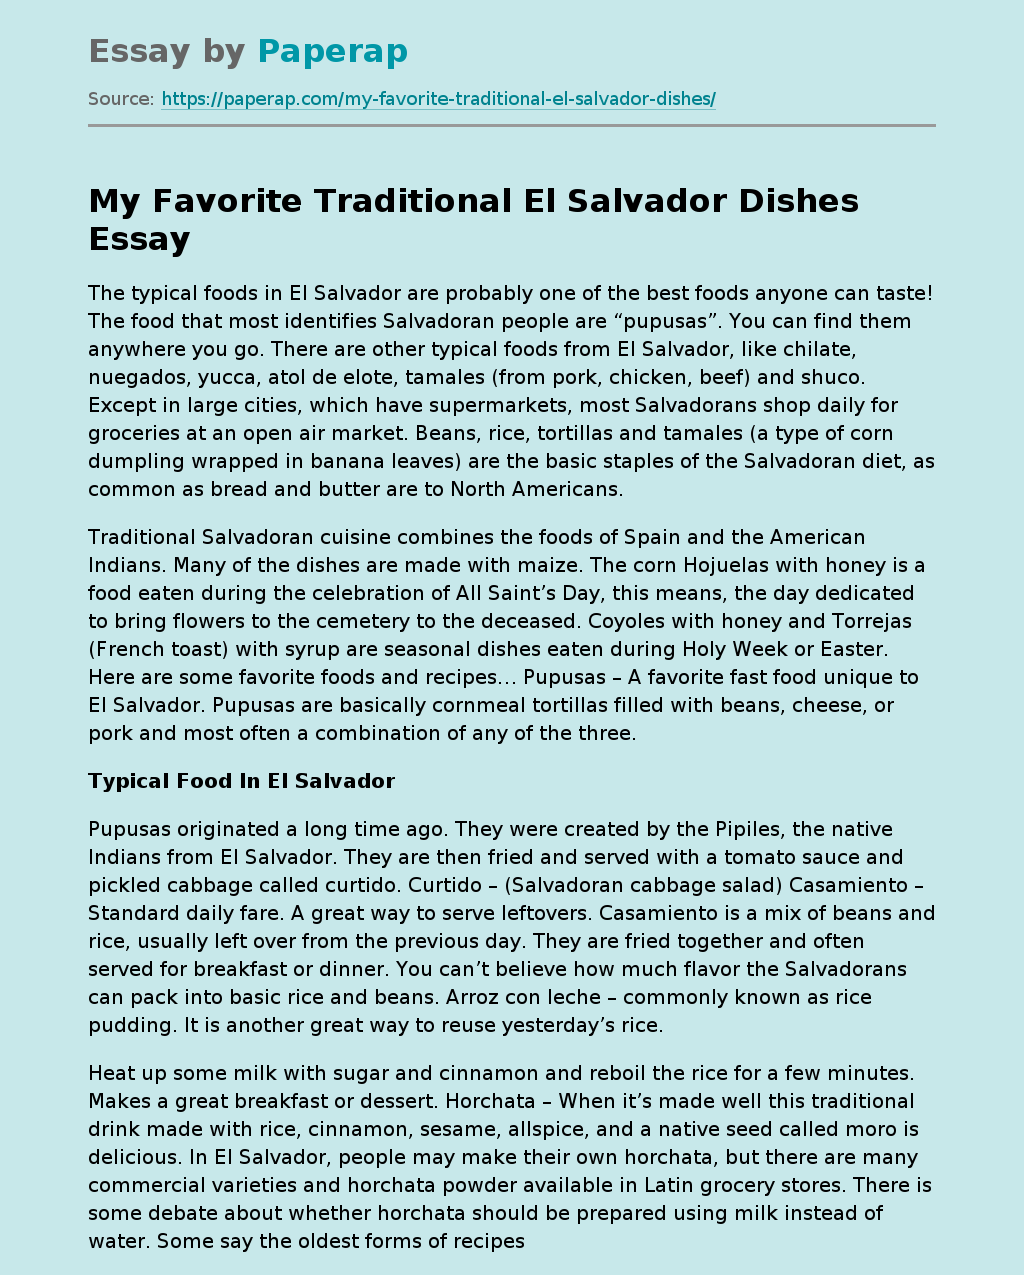 My Favorite Traditional El Salvador Dishes